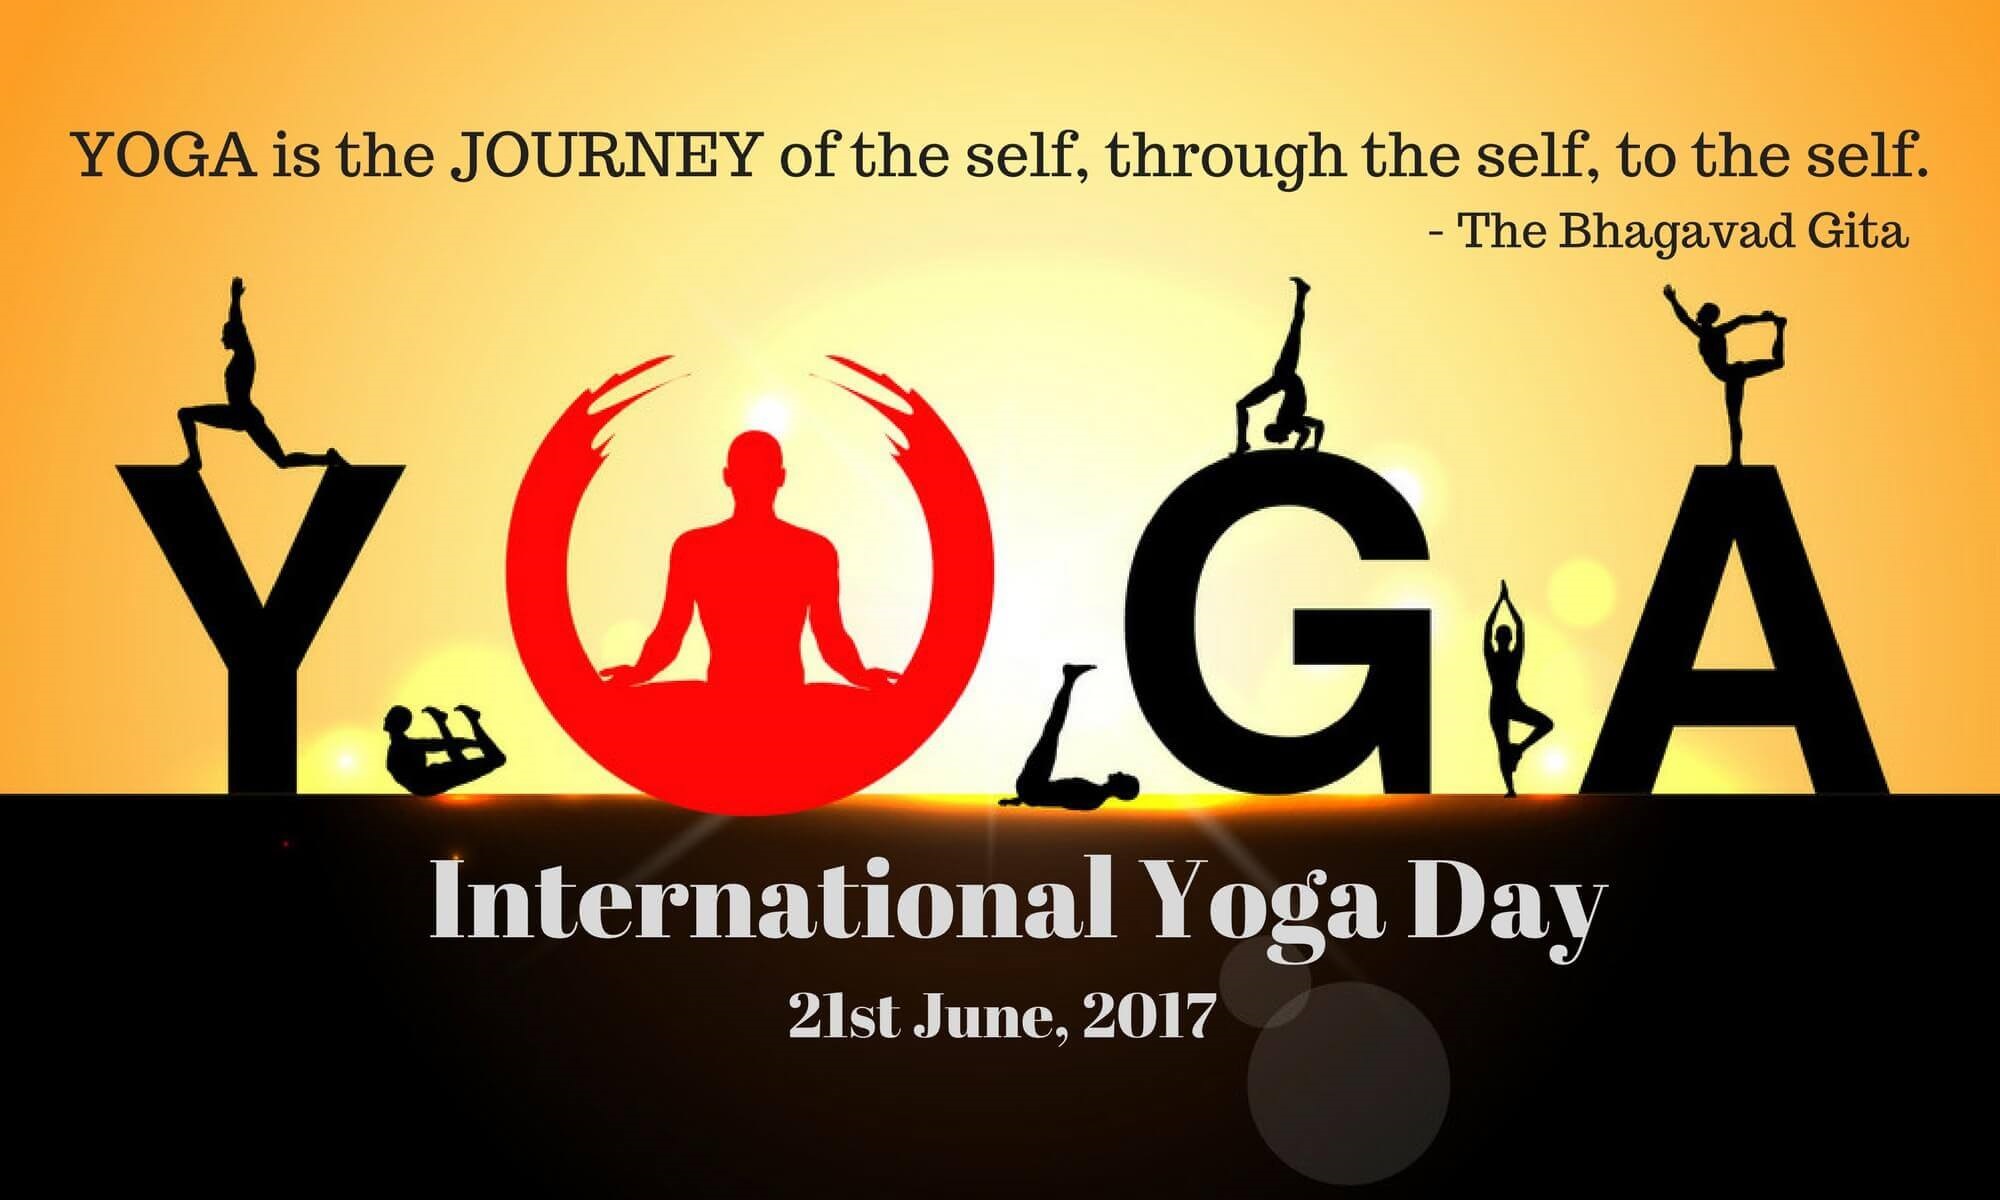 International Yoga Day History and Theme